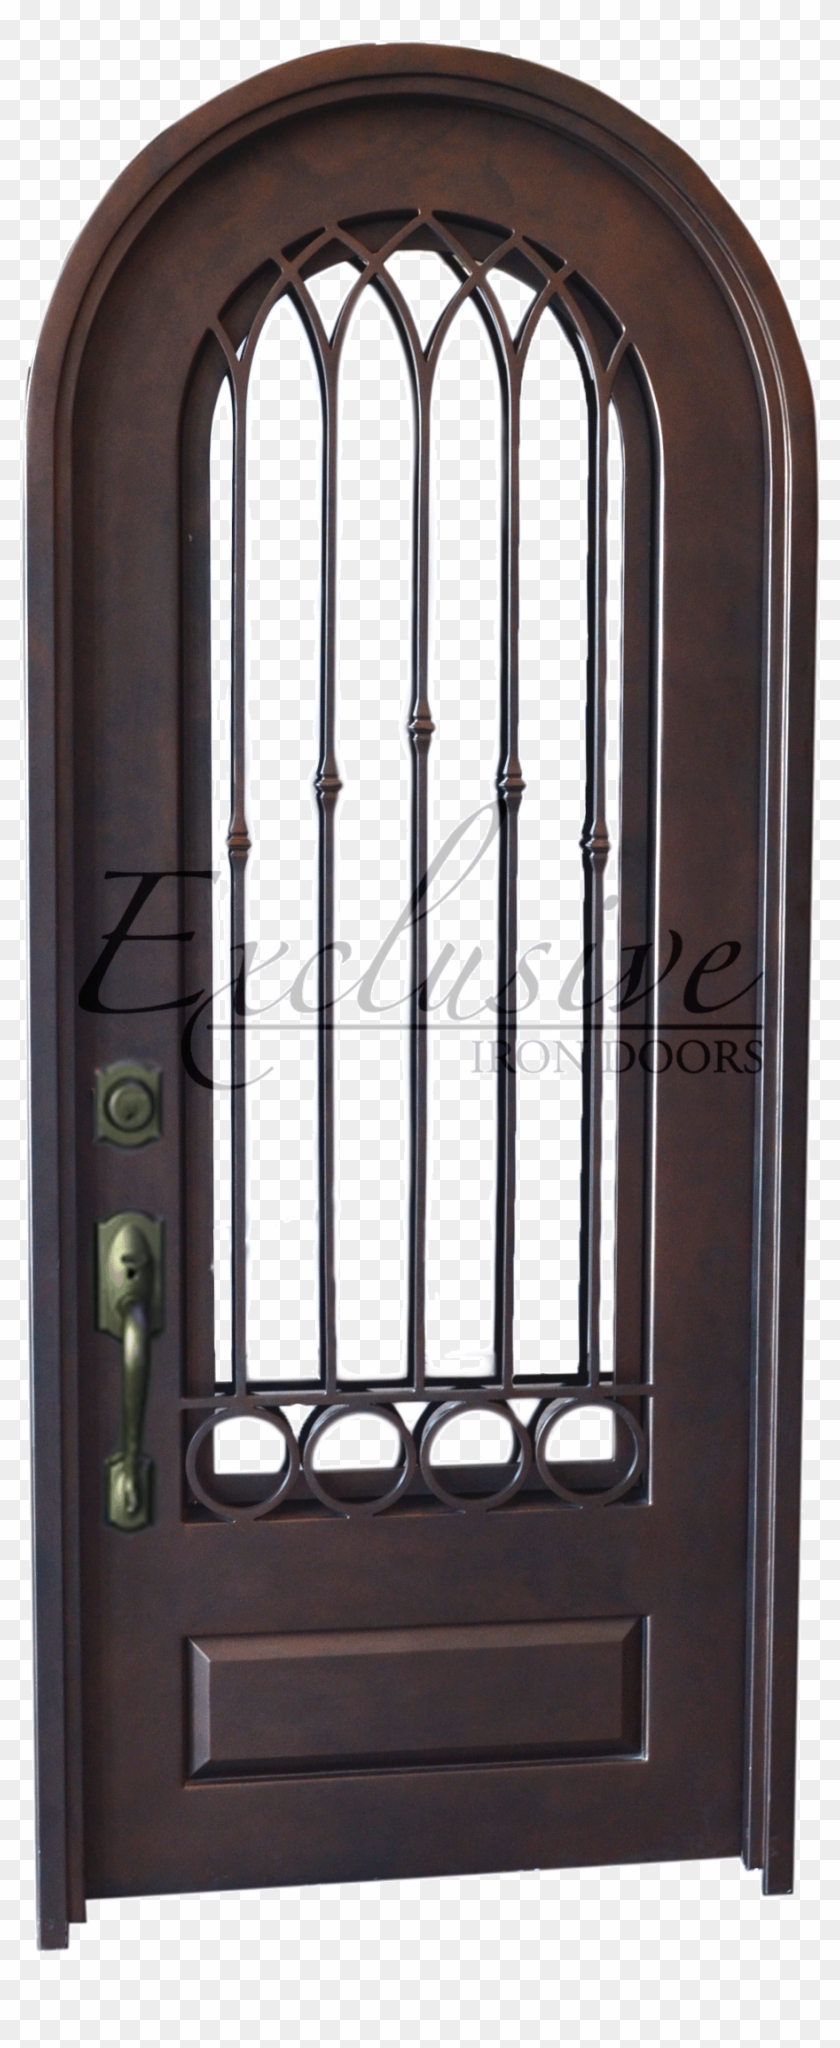 Adelene Round Single Iron Door Exclusive Iron Doors - Arch Clipart #2644668